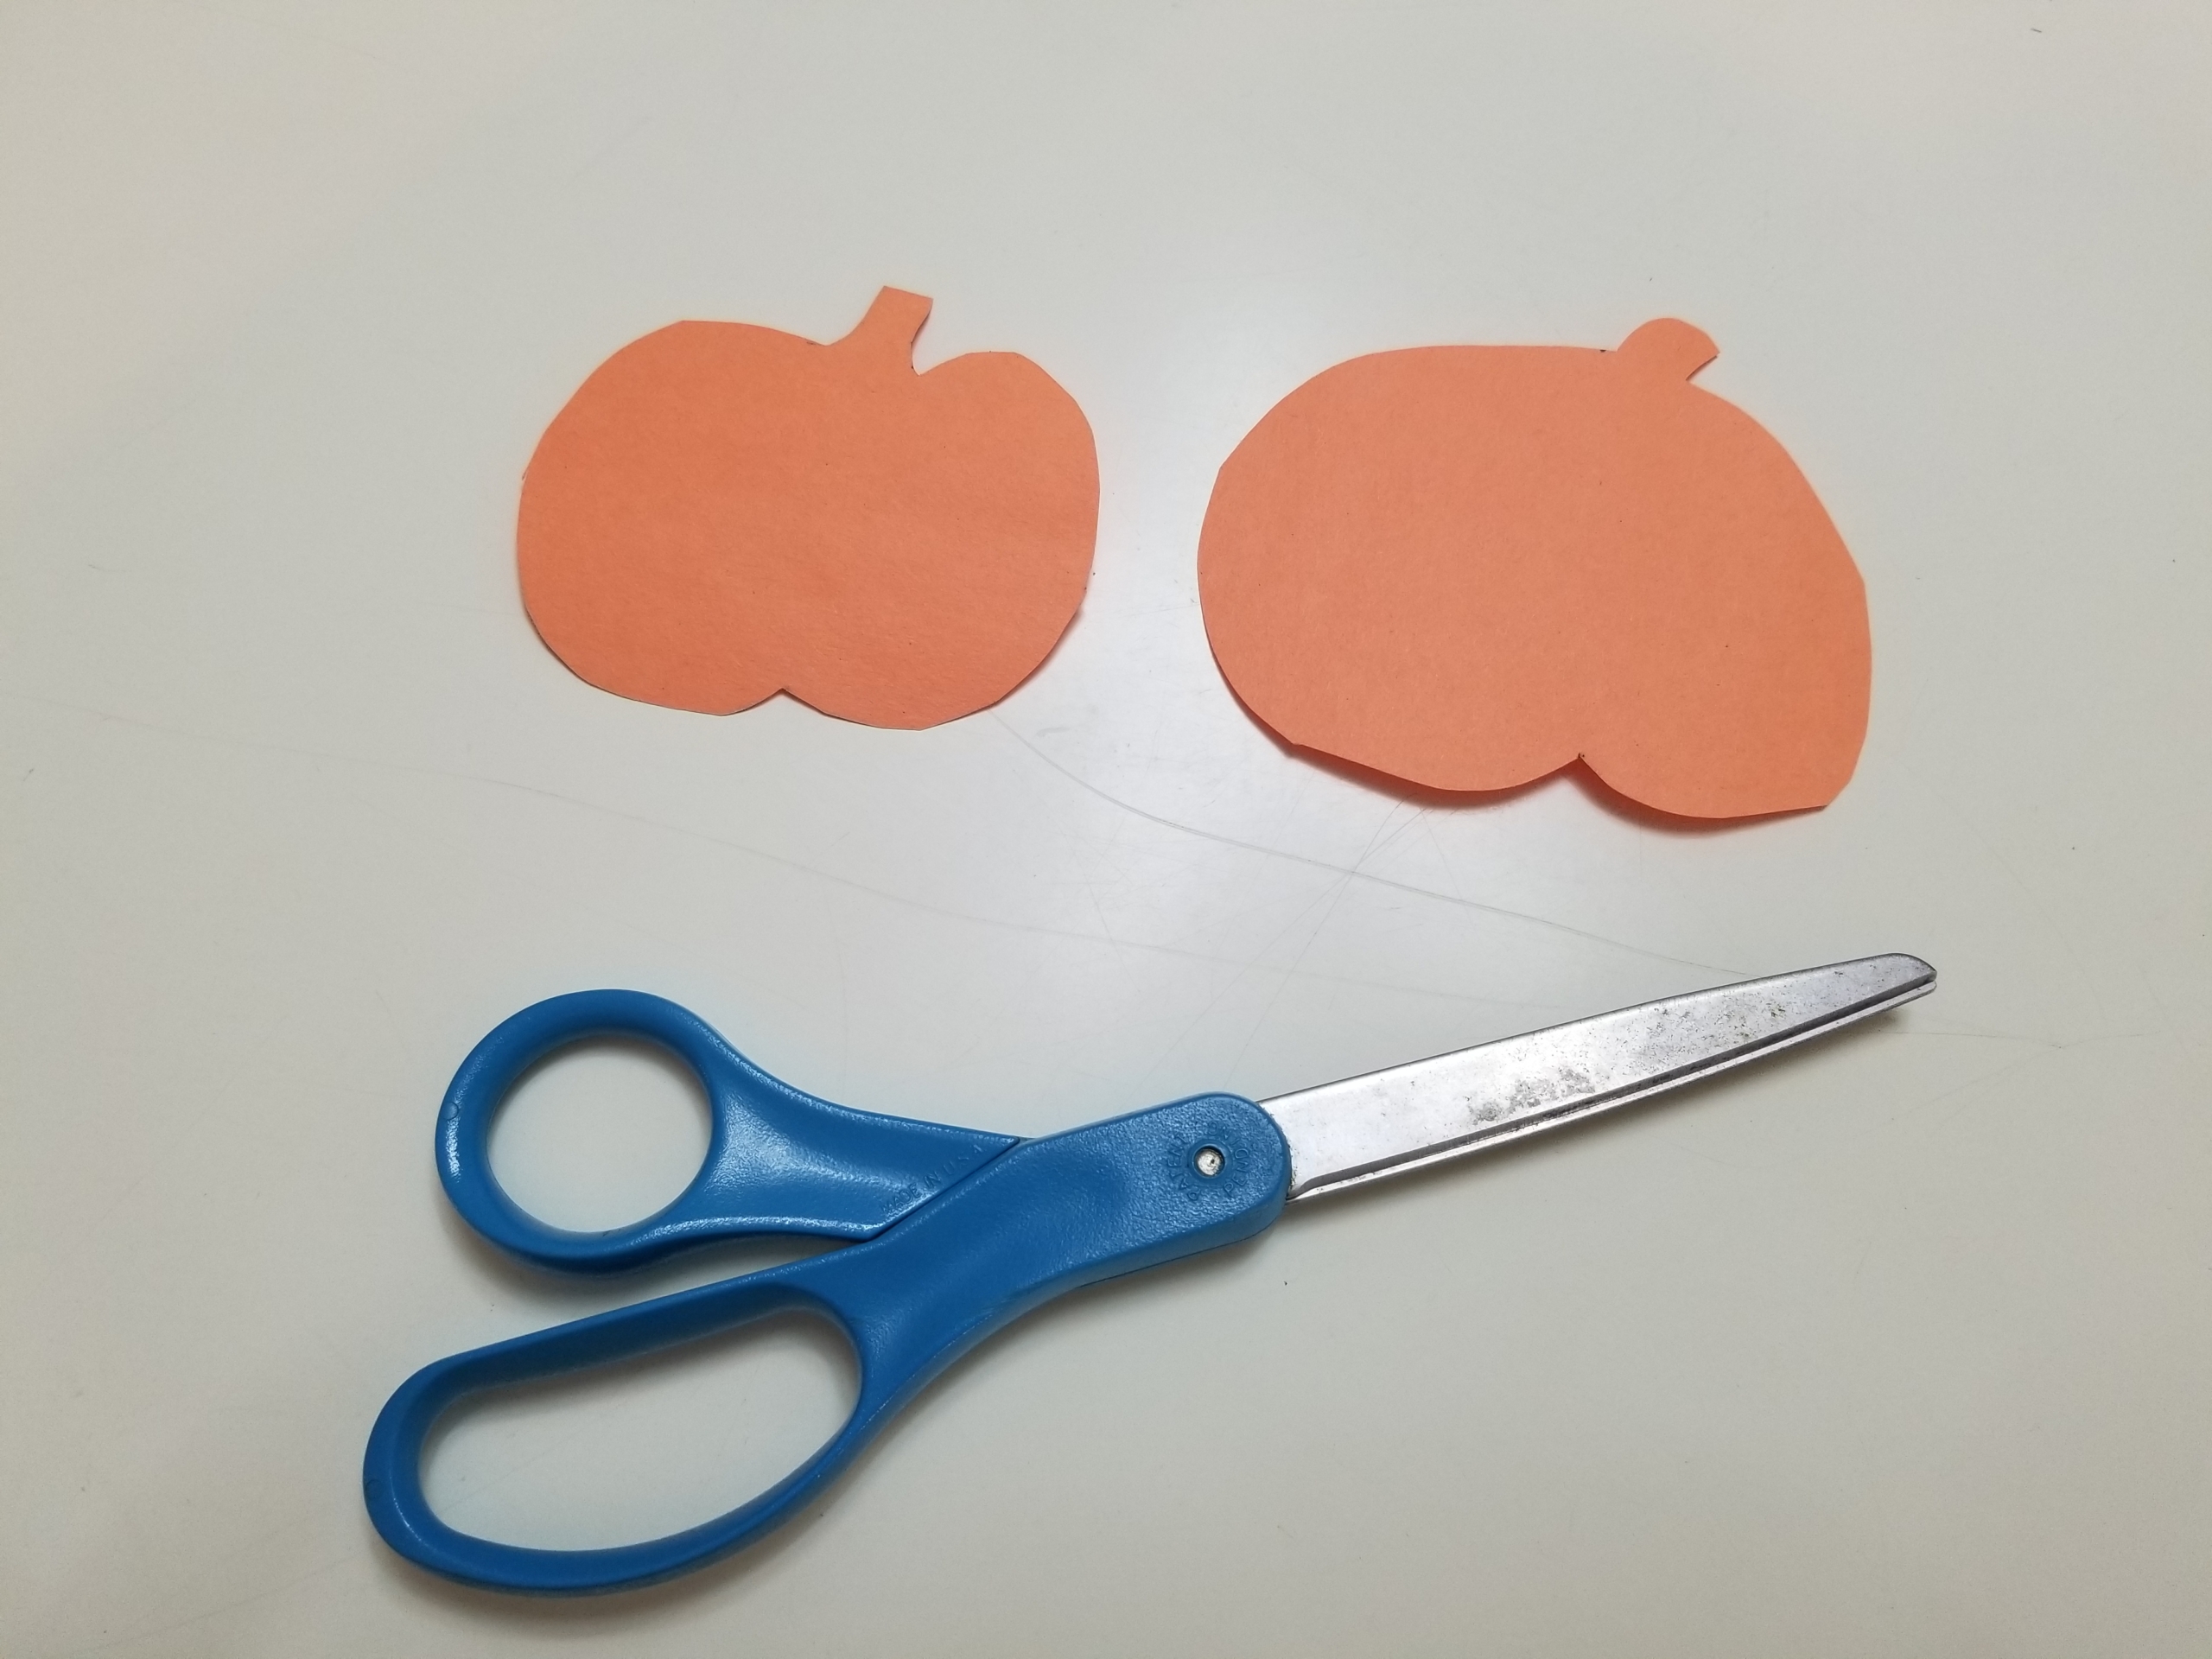 Two orange pumpkins cut out of paper